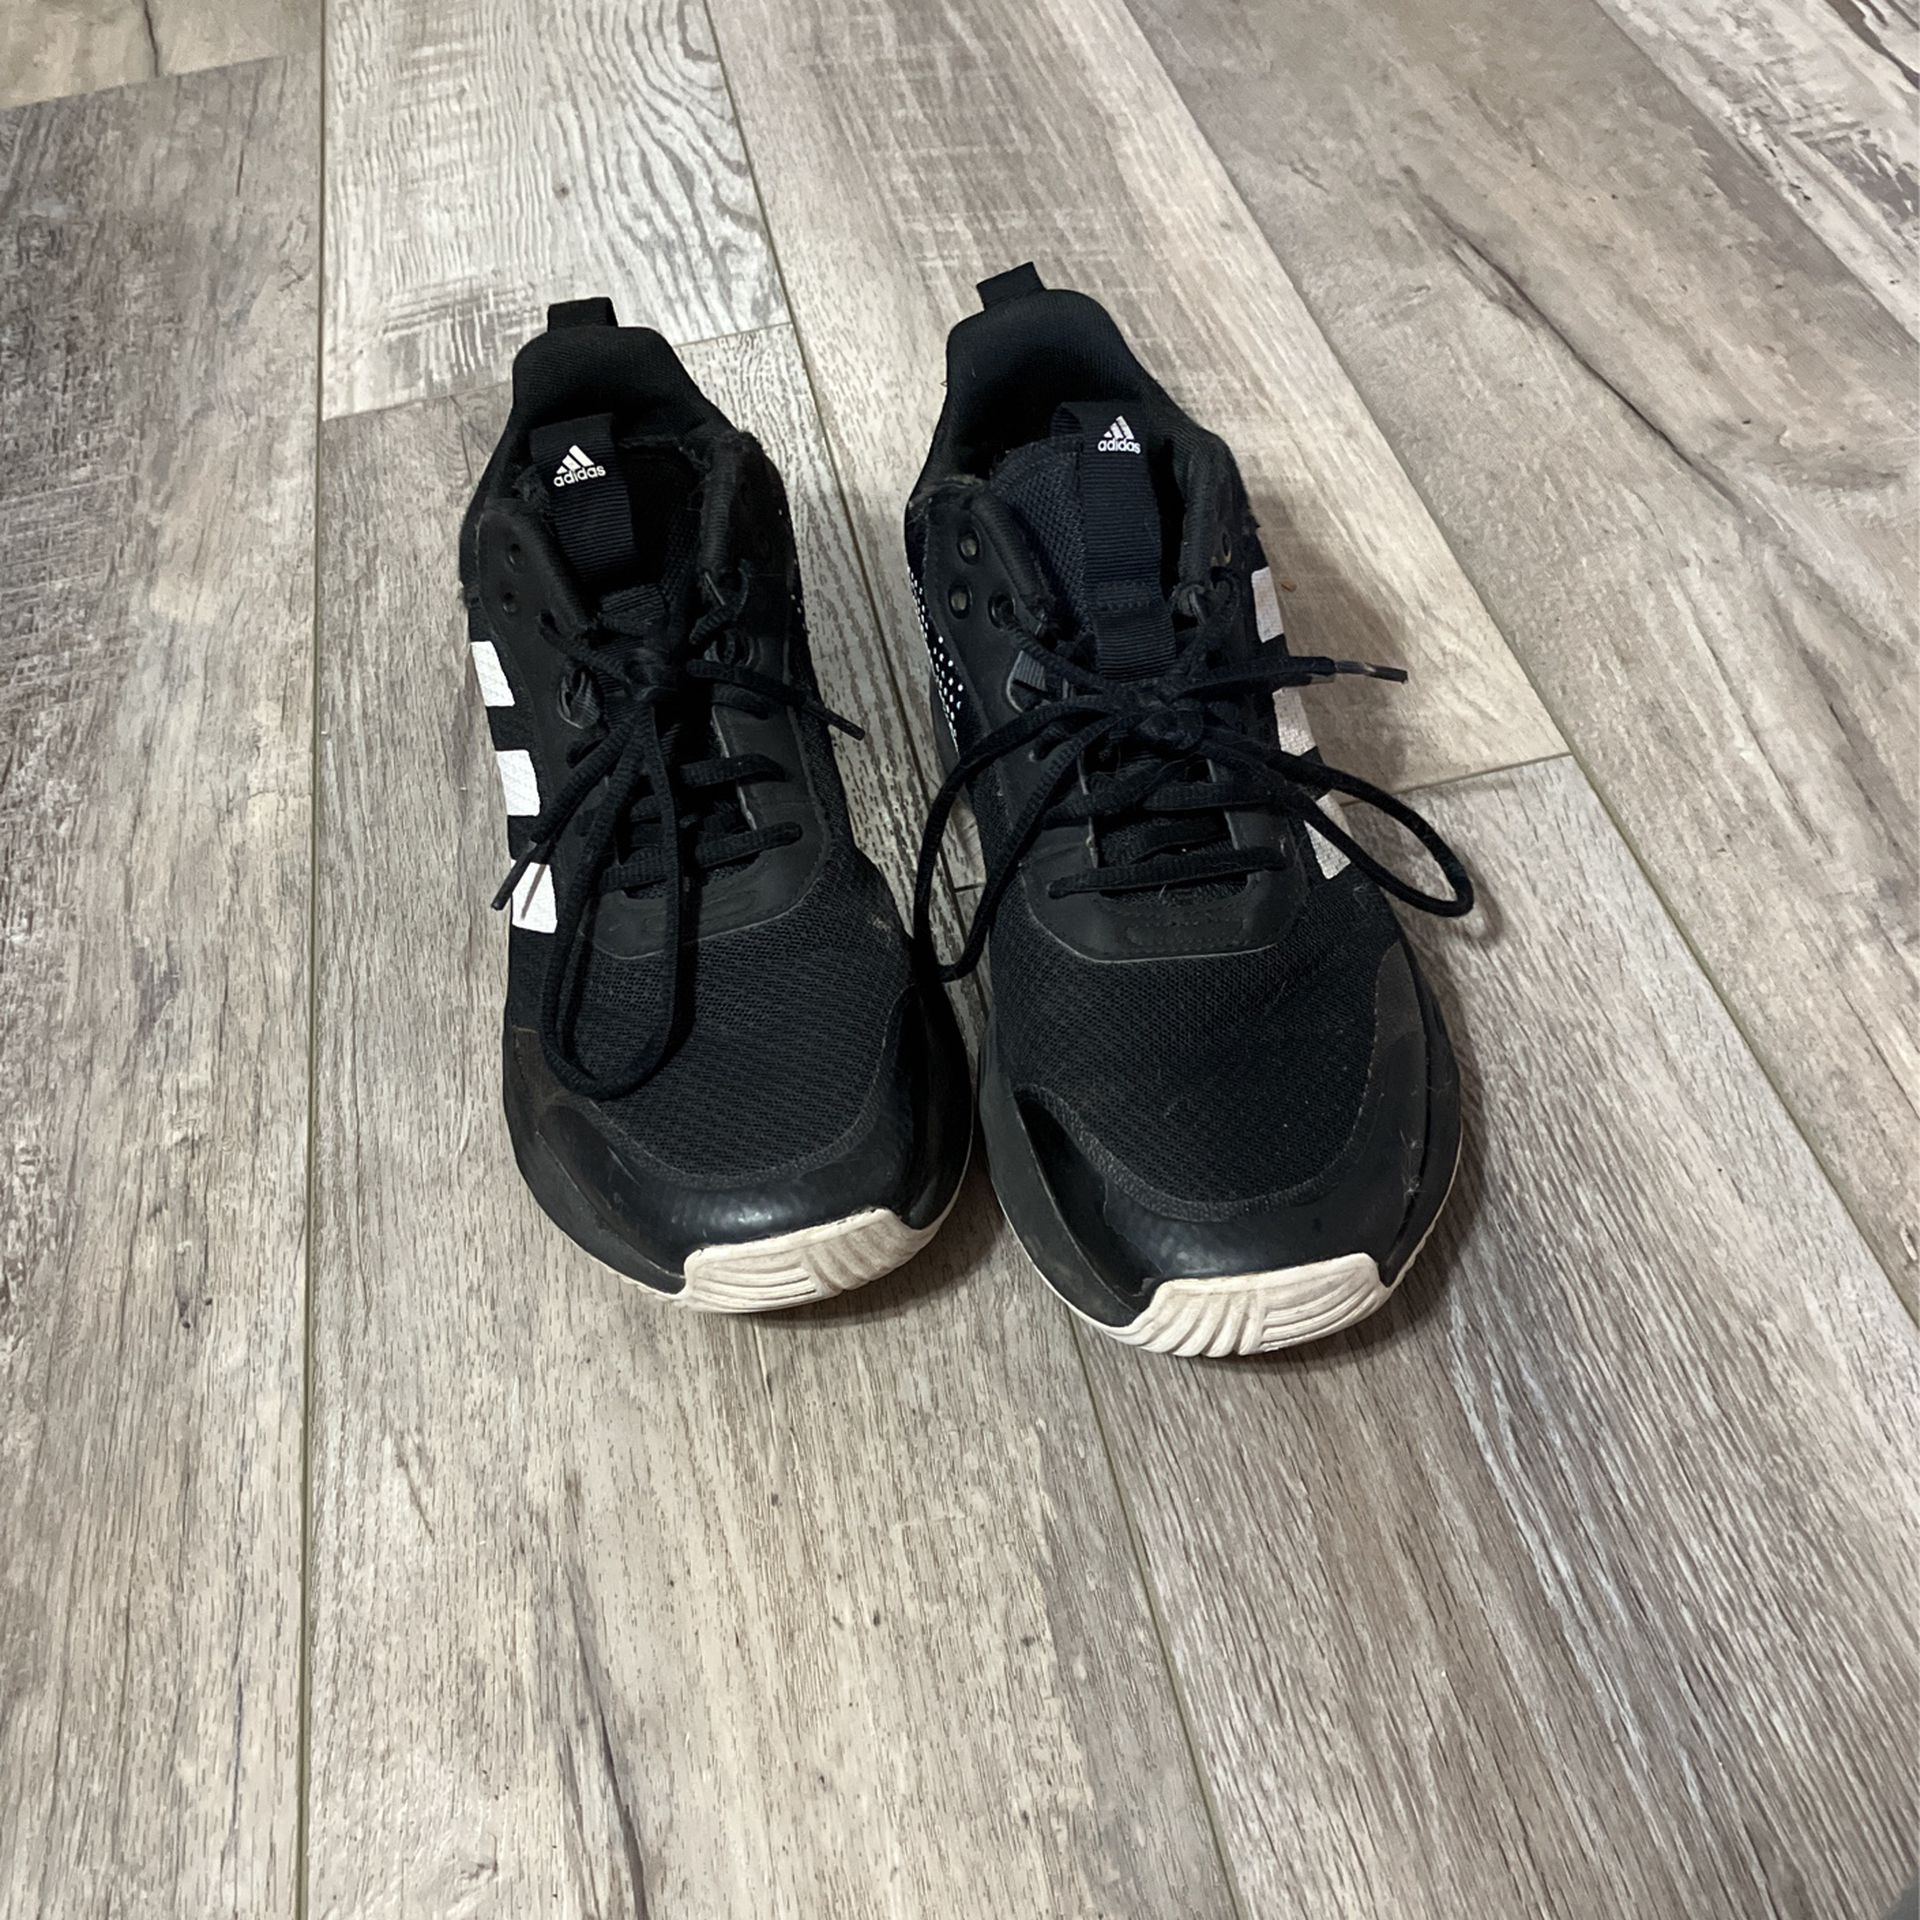 Size 7.5 Adidas Basketball Shoes